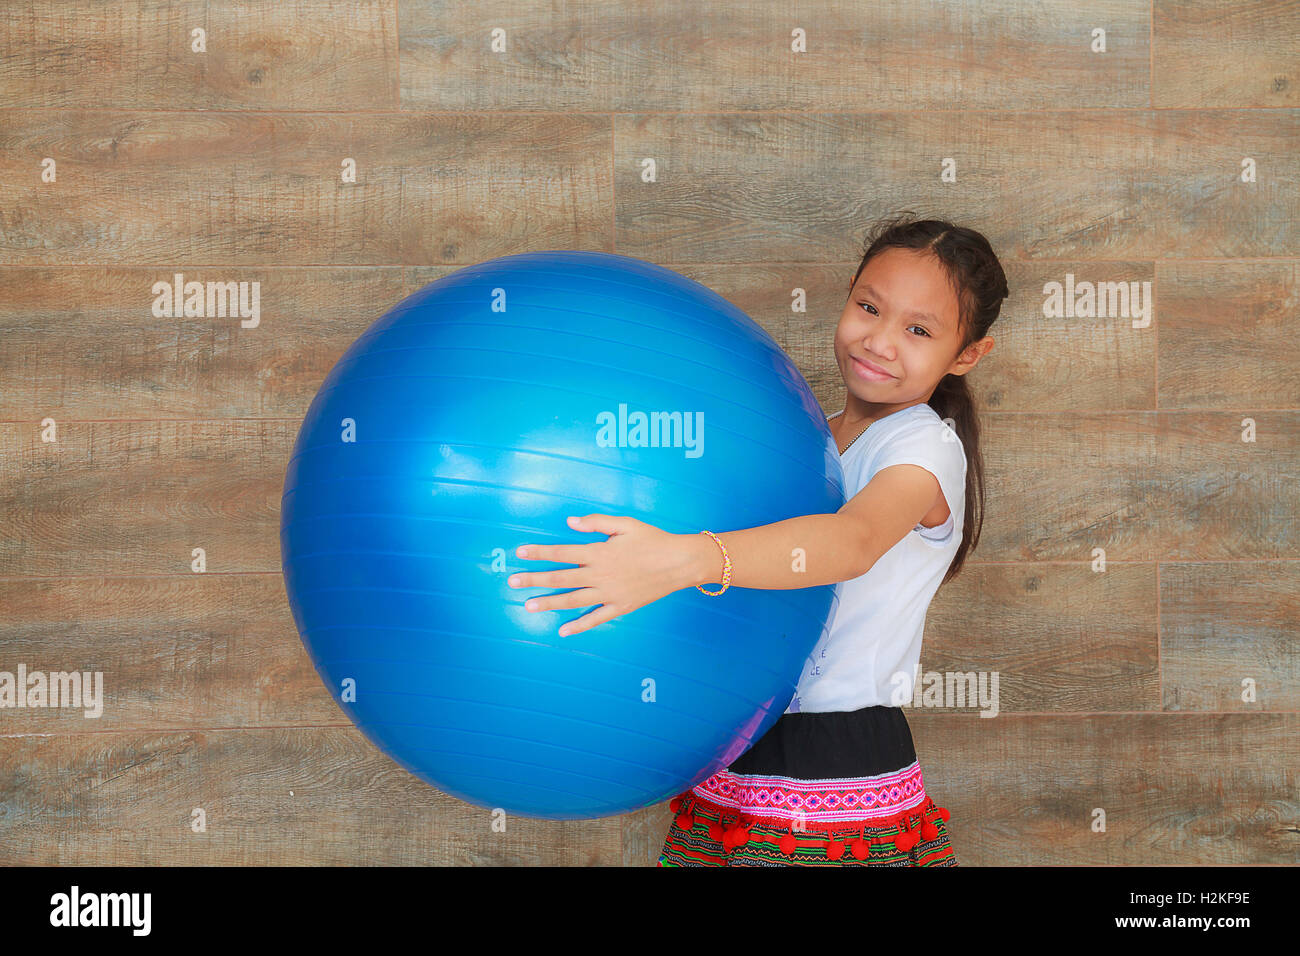 Girl child holding blue big rubber ball. Stock Photo